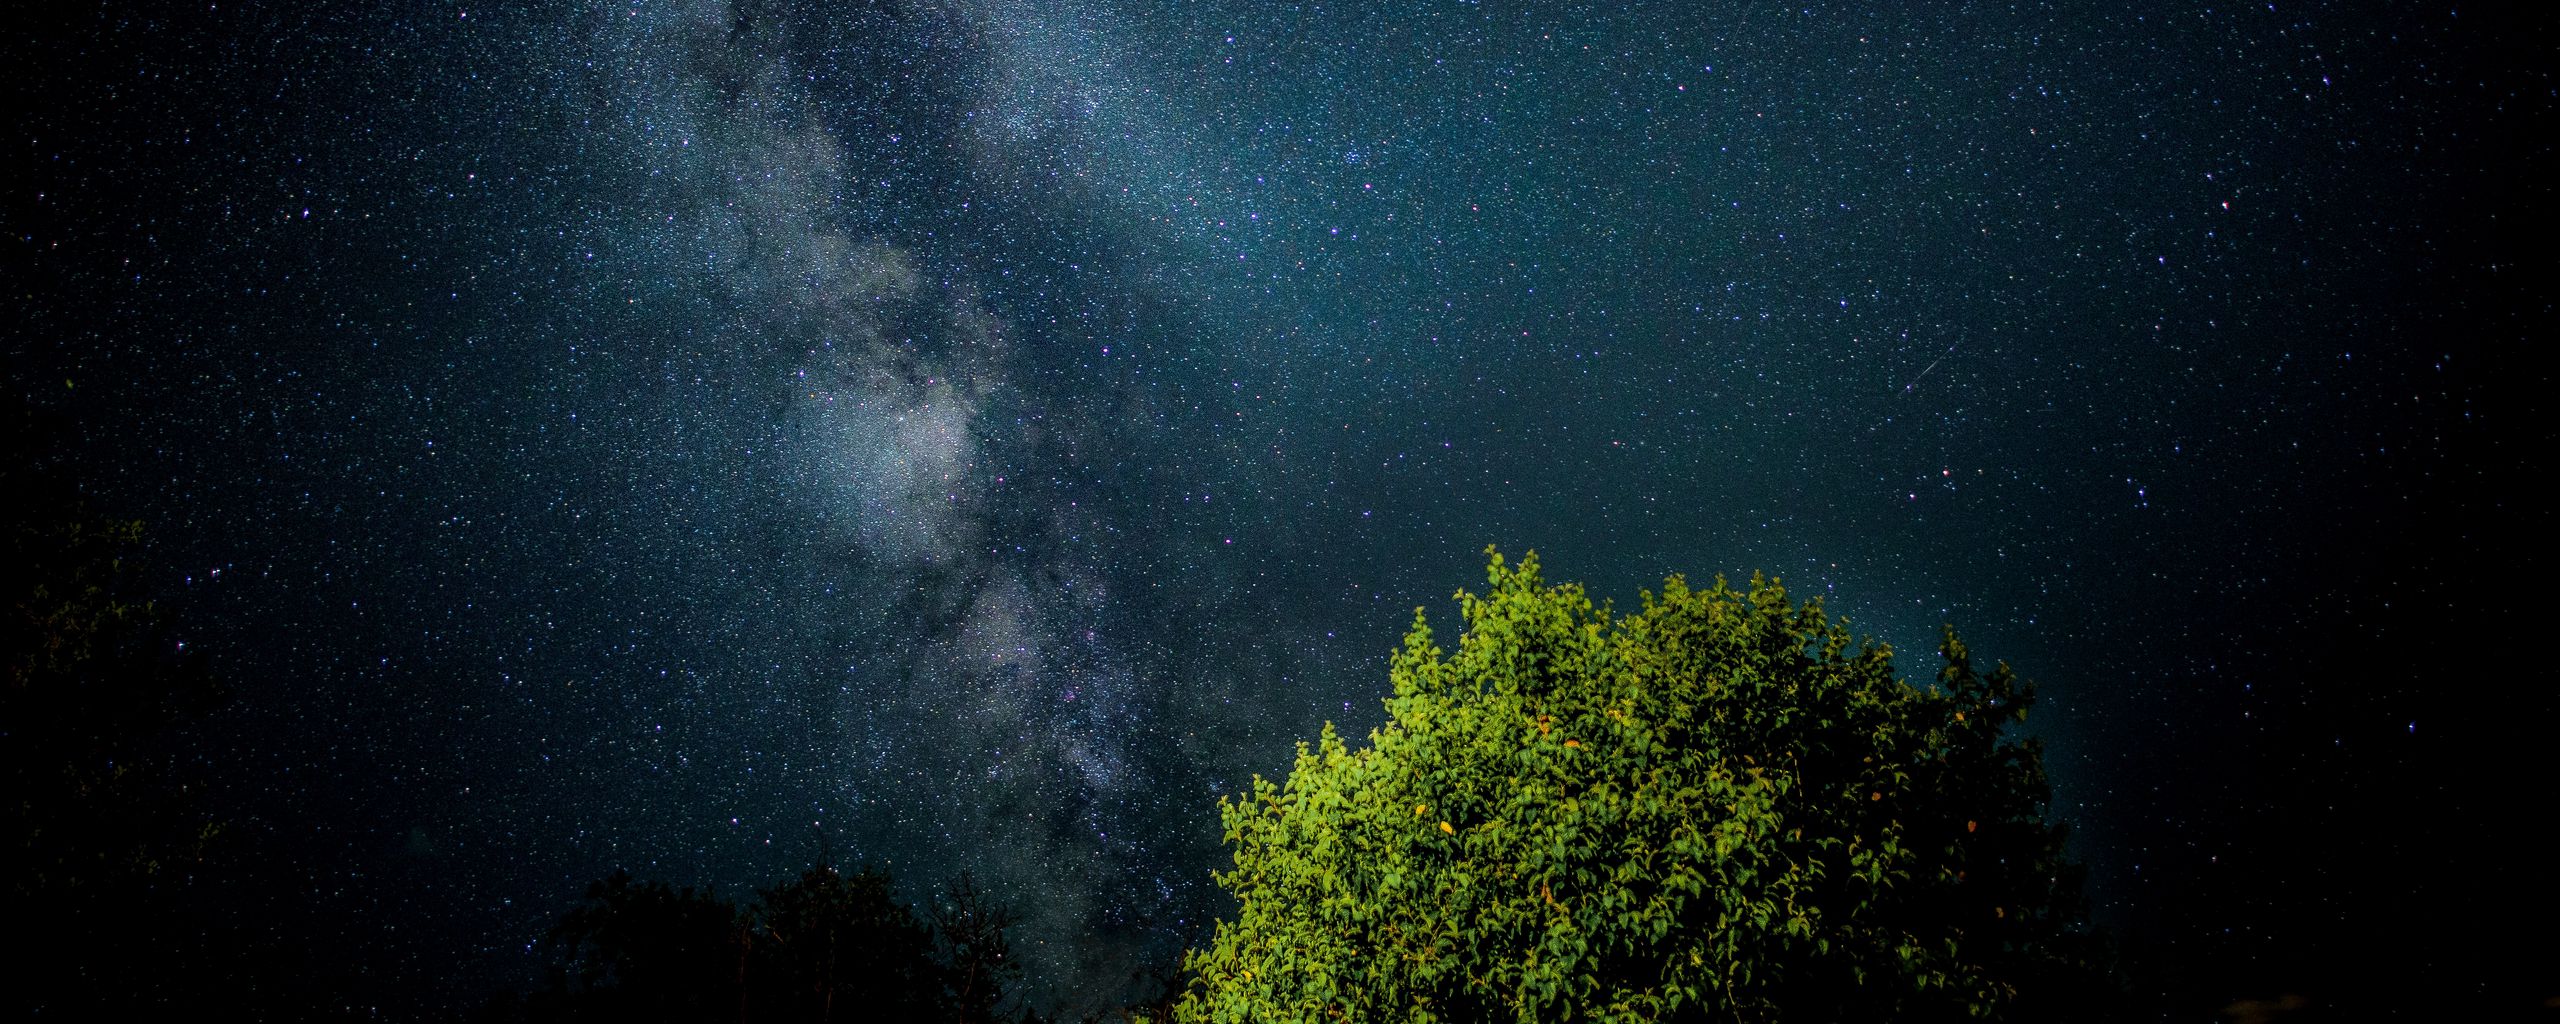 Download wallpaper 2560x1024 starry sky, night, lights ultrawide